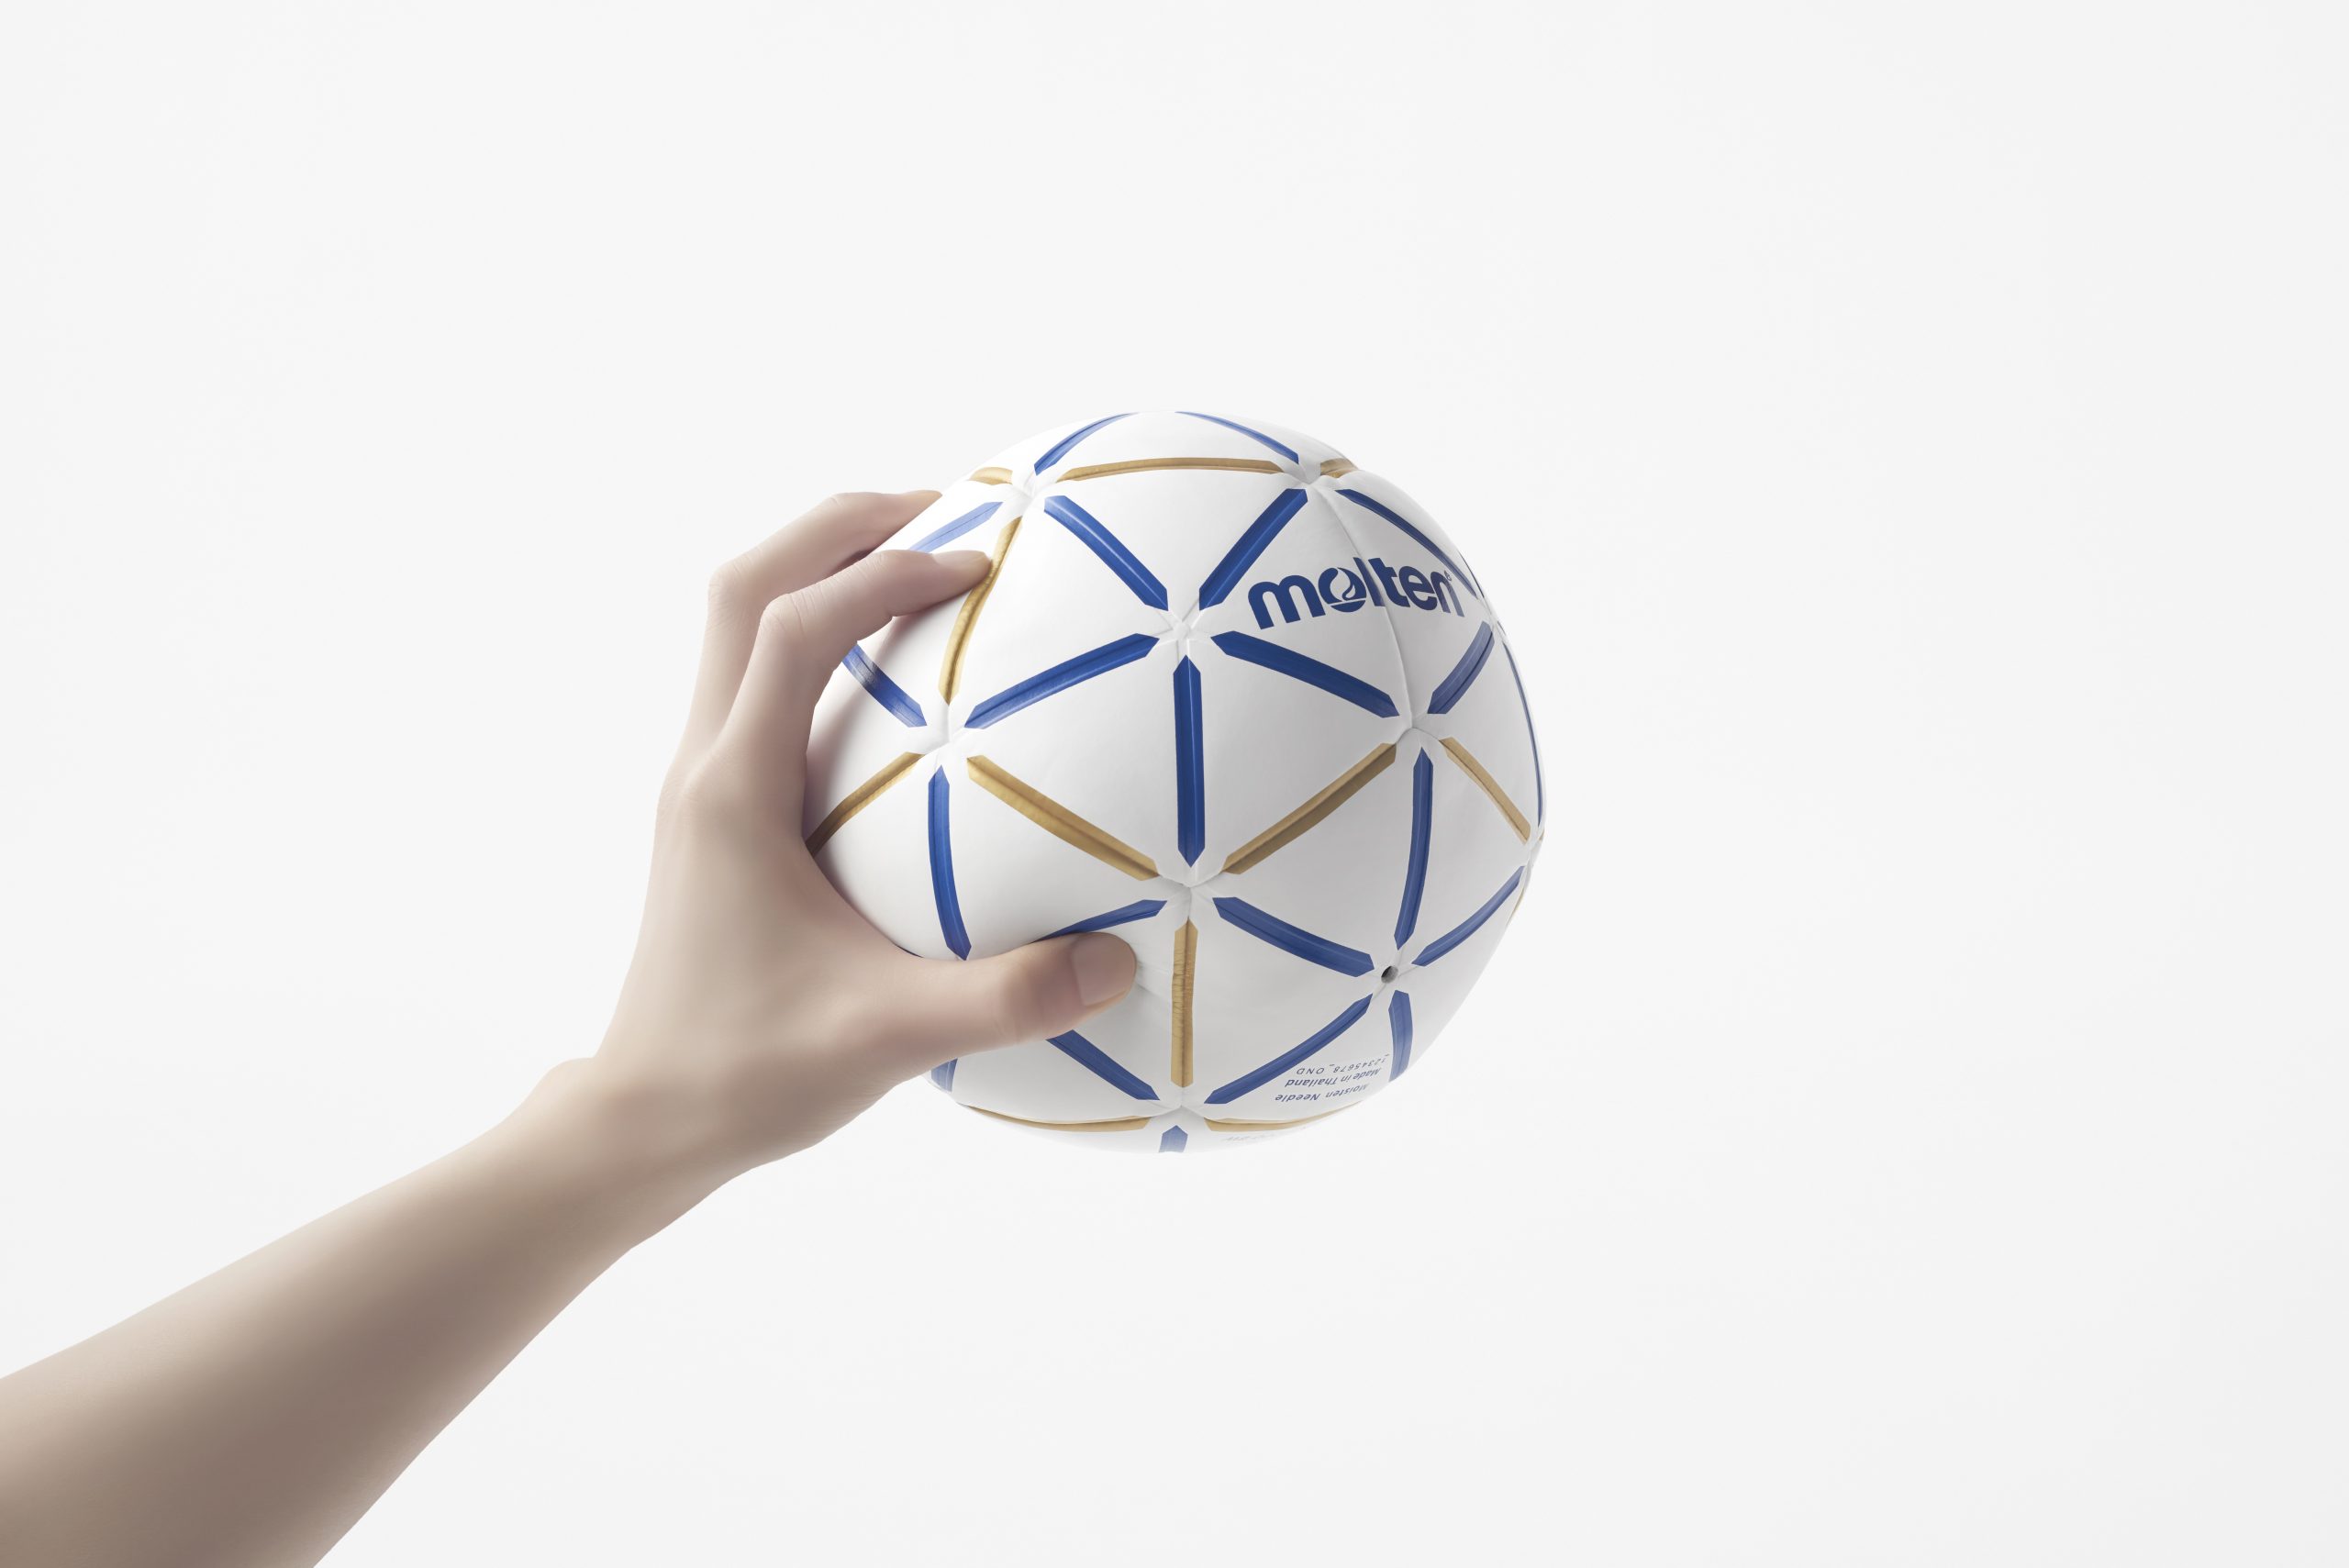 Ballons et résines de handball